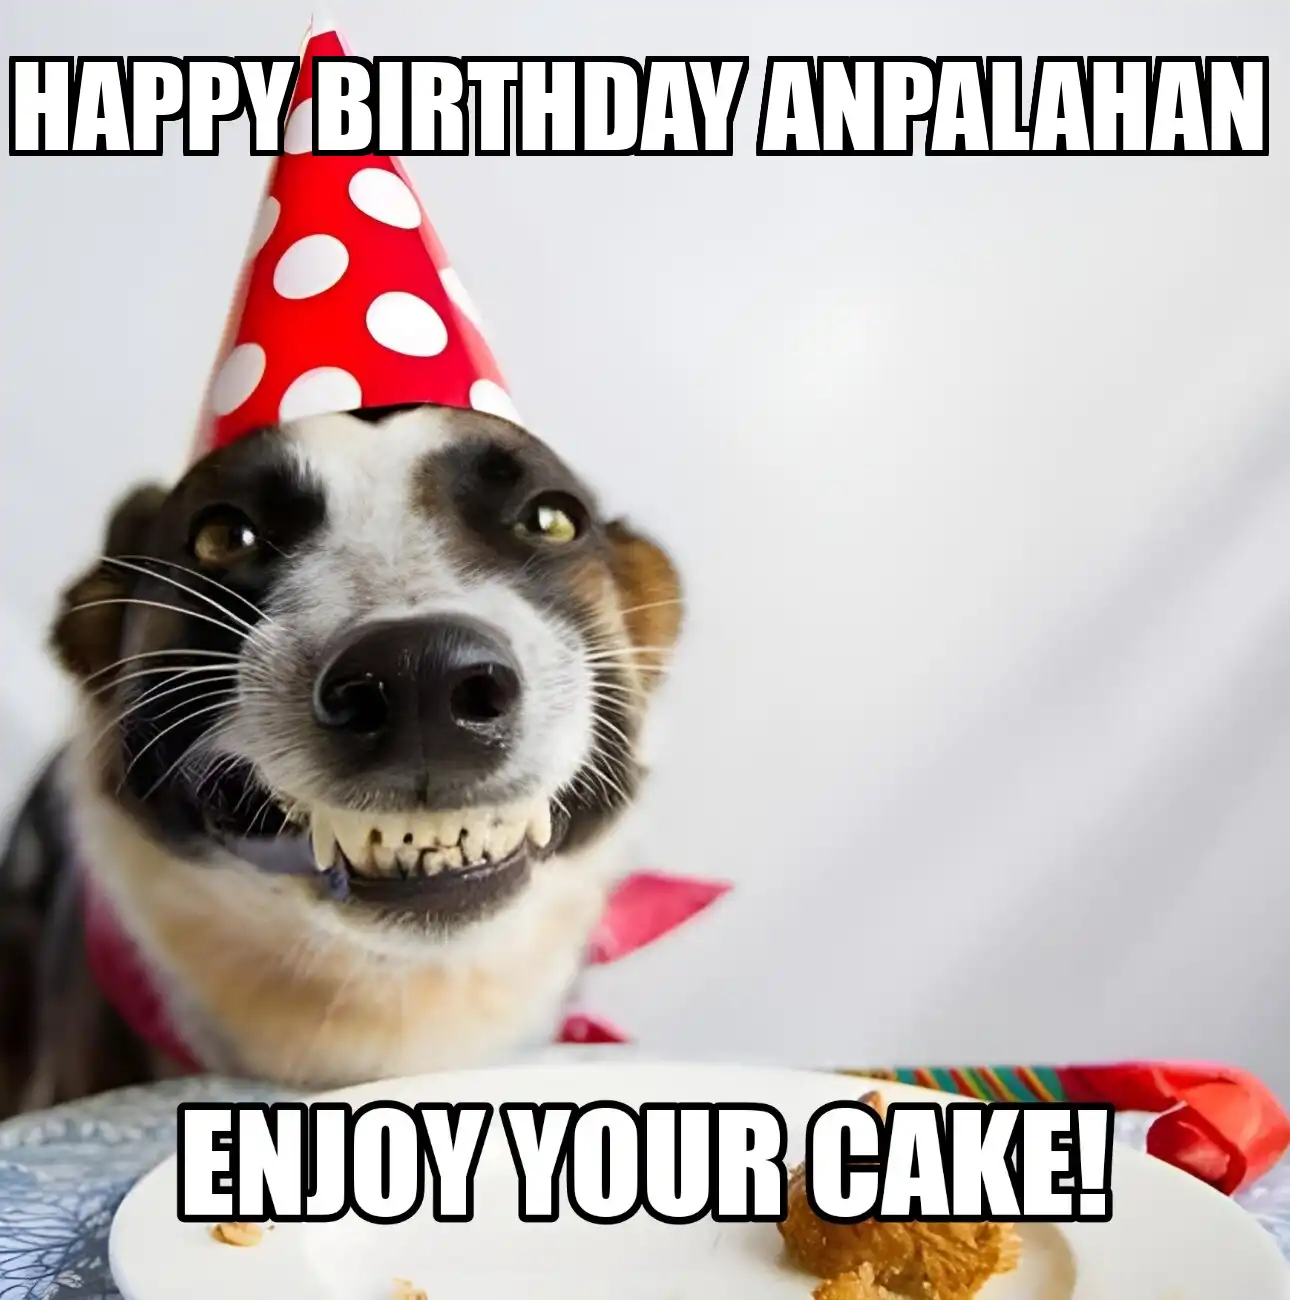 Happy Birthday Anpalahan Enjoy Your Cake Dog Meme